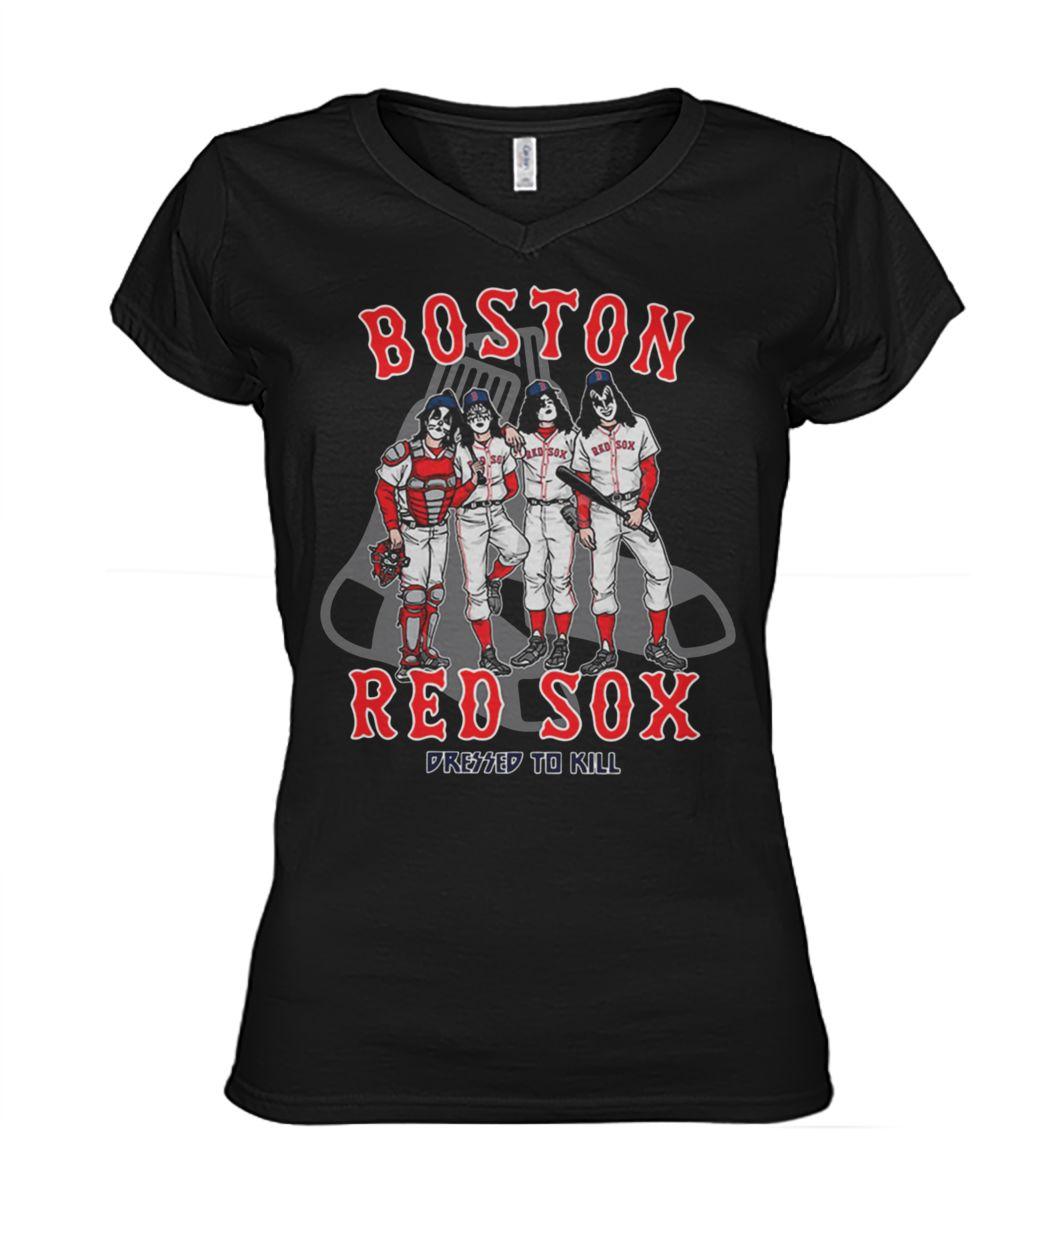 Boston red sox dressed to kill kiss rock band womens v-neck